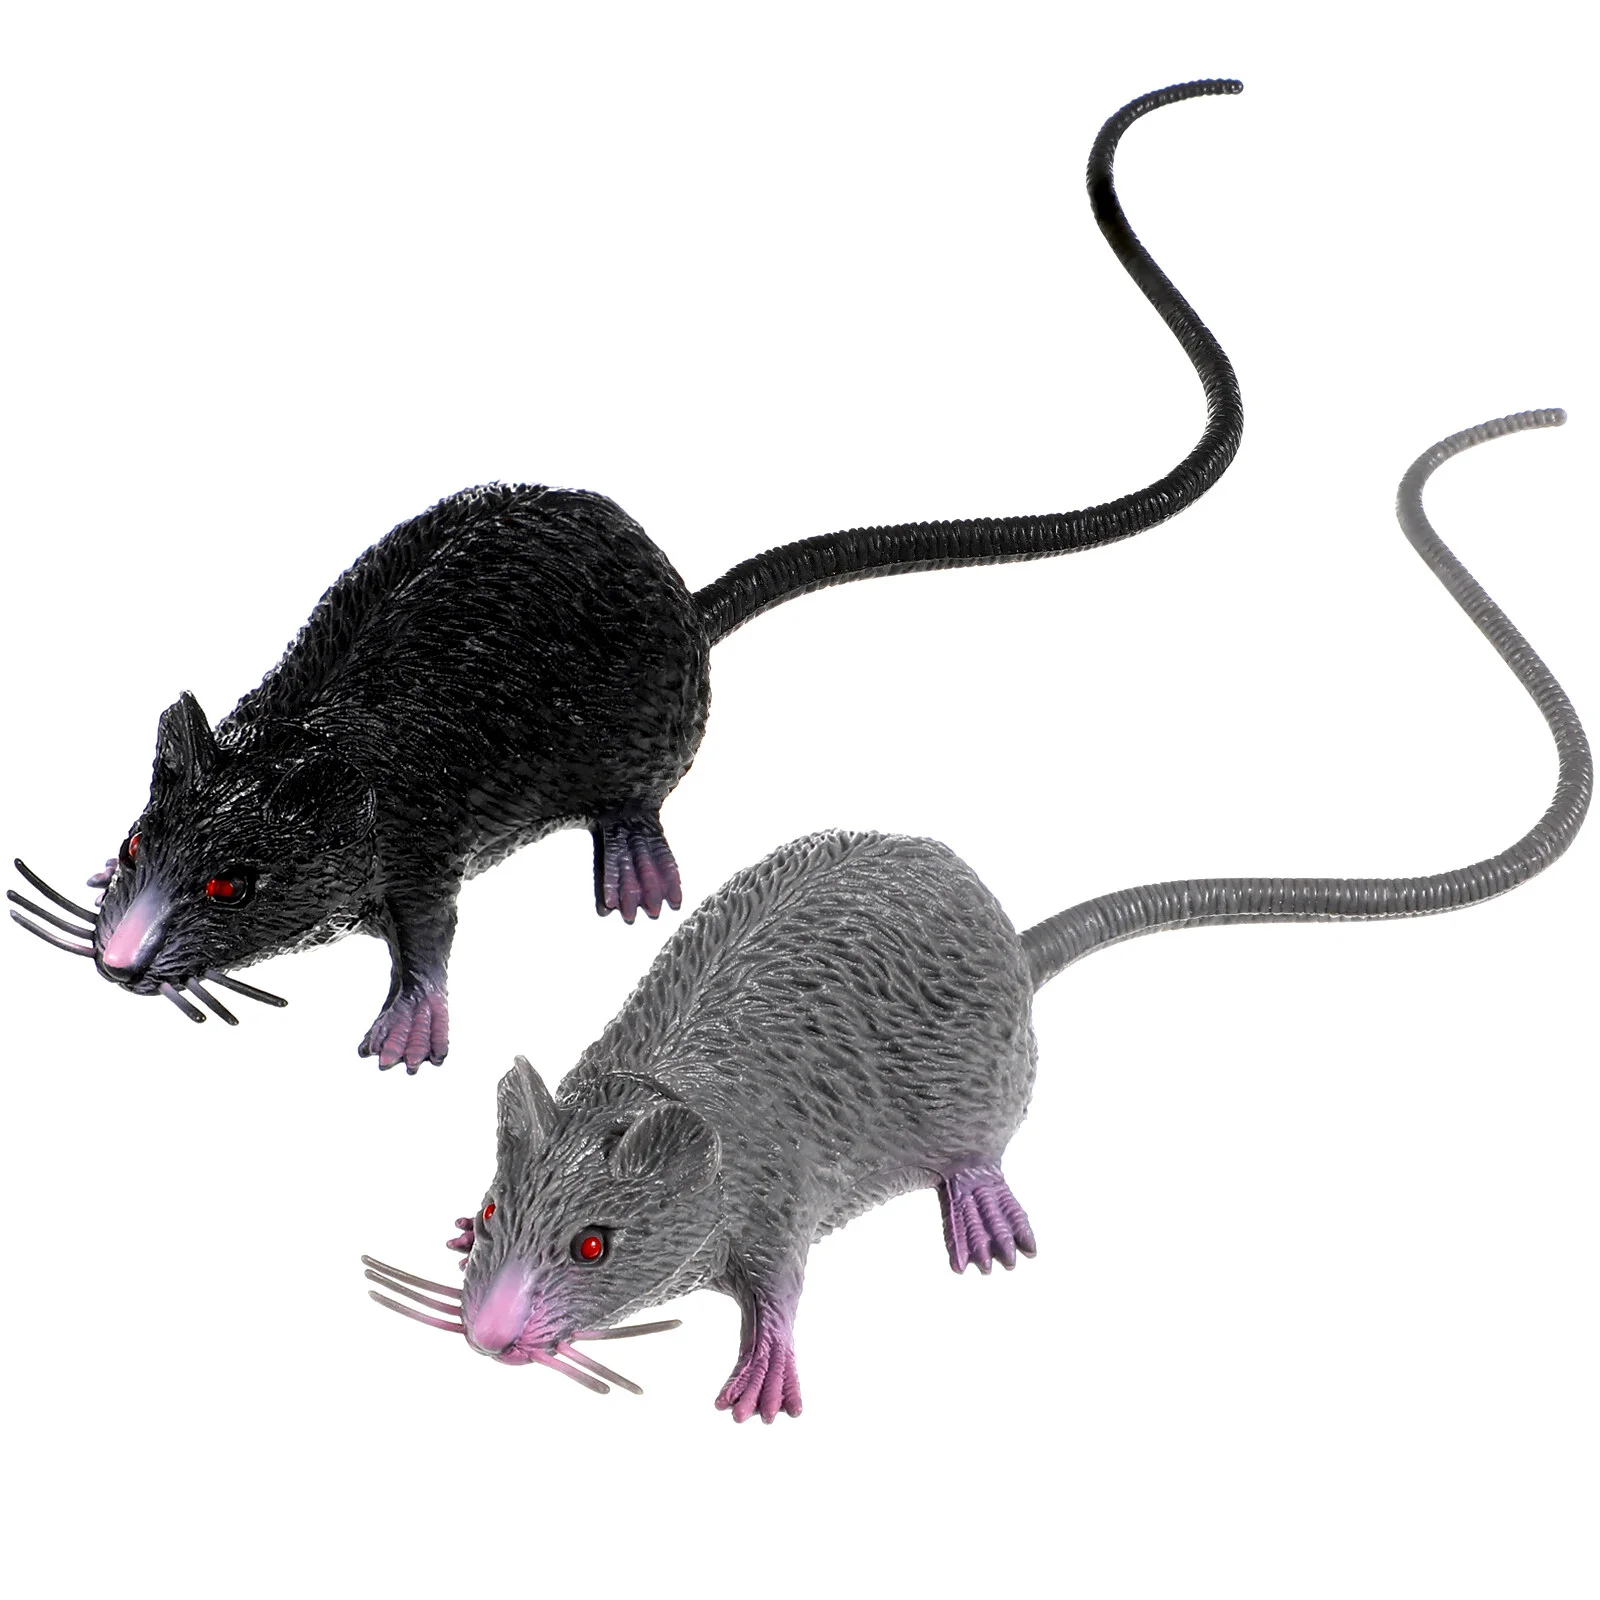 

2 Pcs Realistic Mice Toys Lifelike Mice Creepy Toys Spooky Fake Rat Figures Tricks Pranks Props